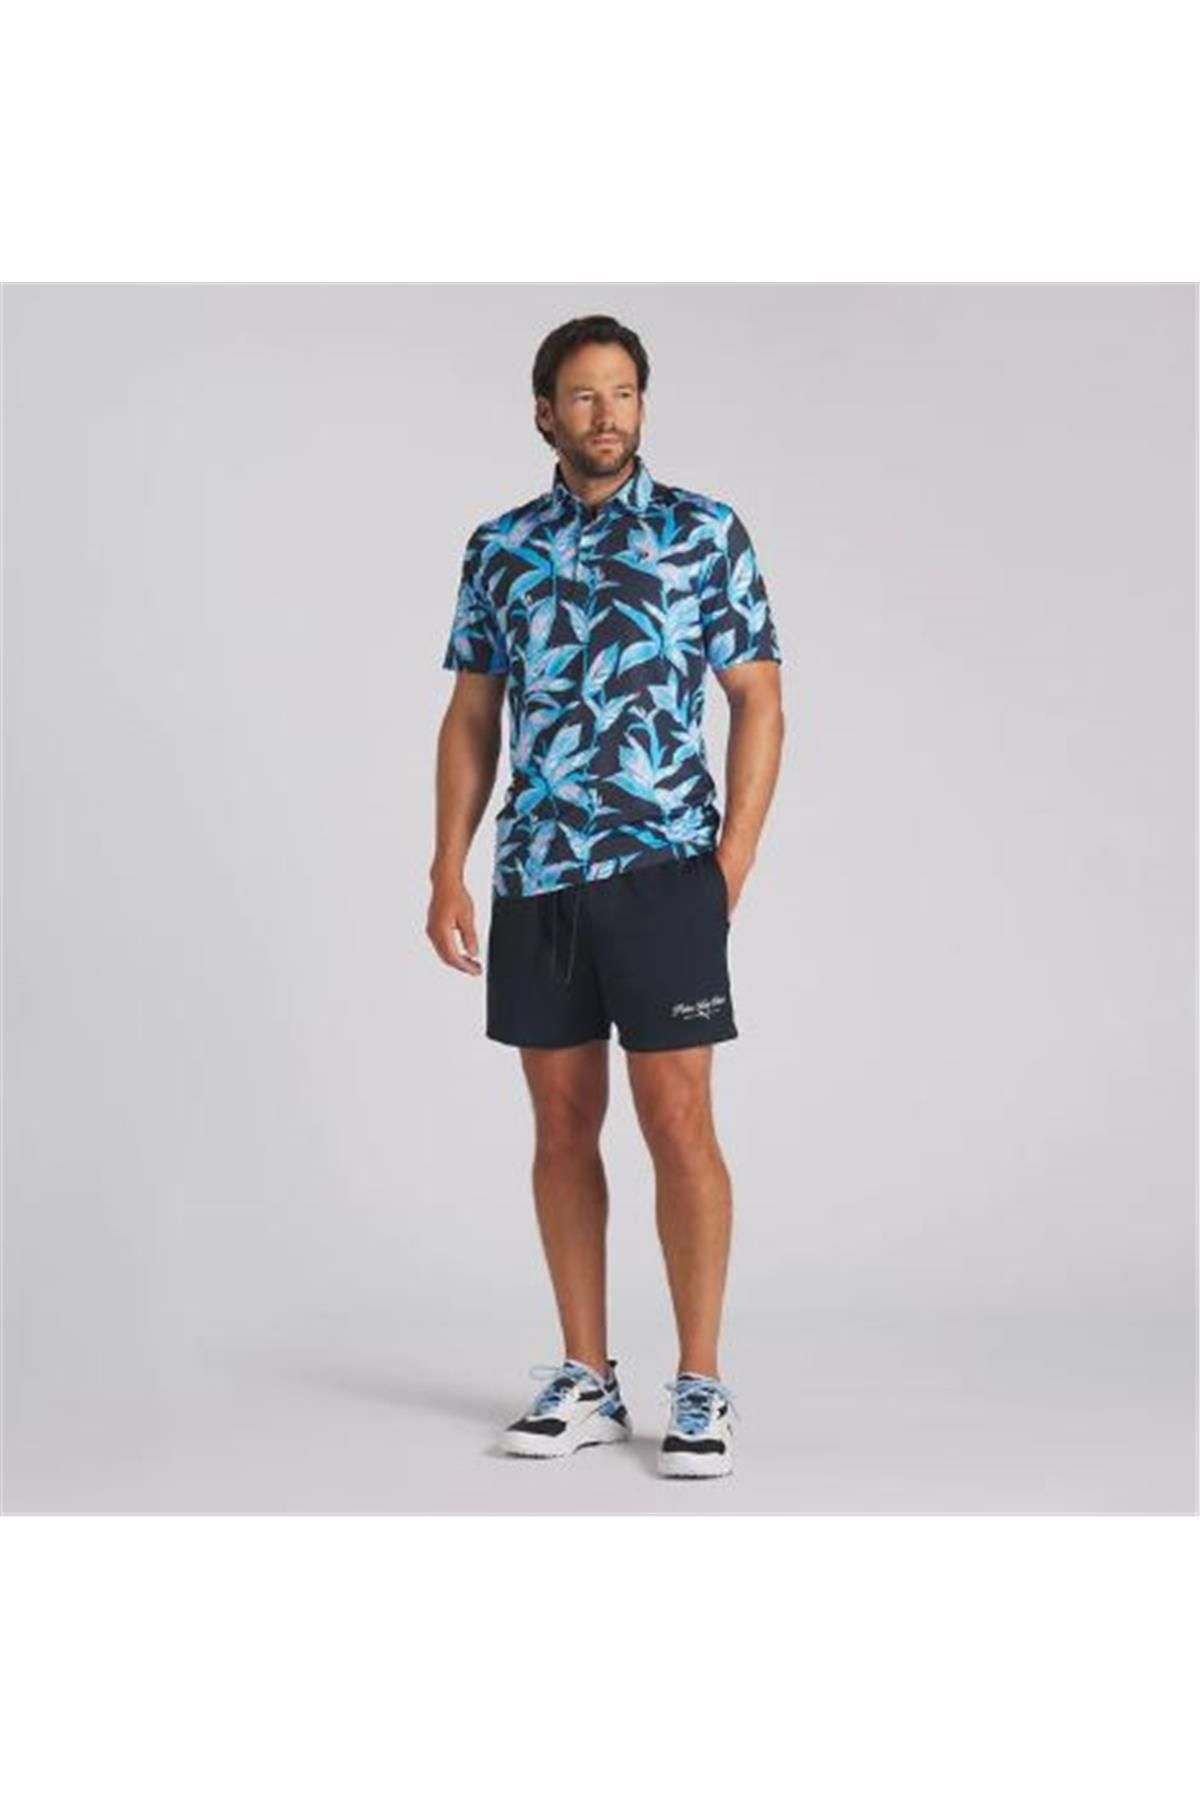 Puma x PTC Floral Polo Tshirt / Erkek Çiçek Baskılı Golf Tshirt